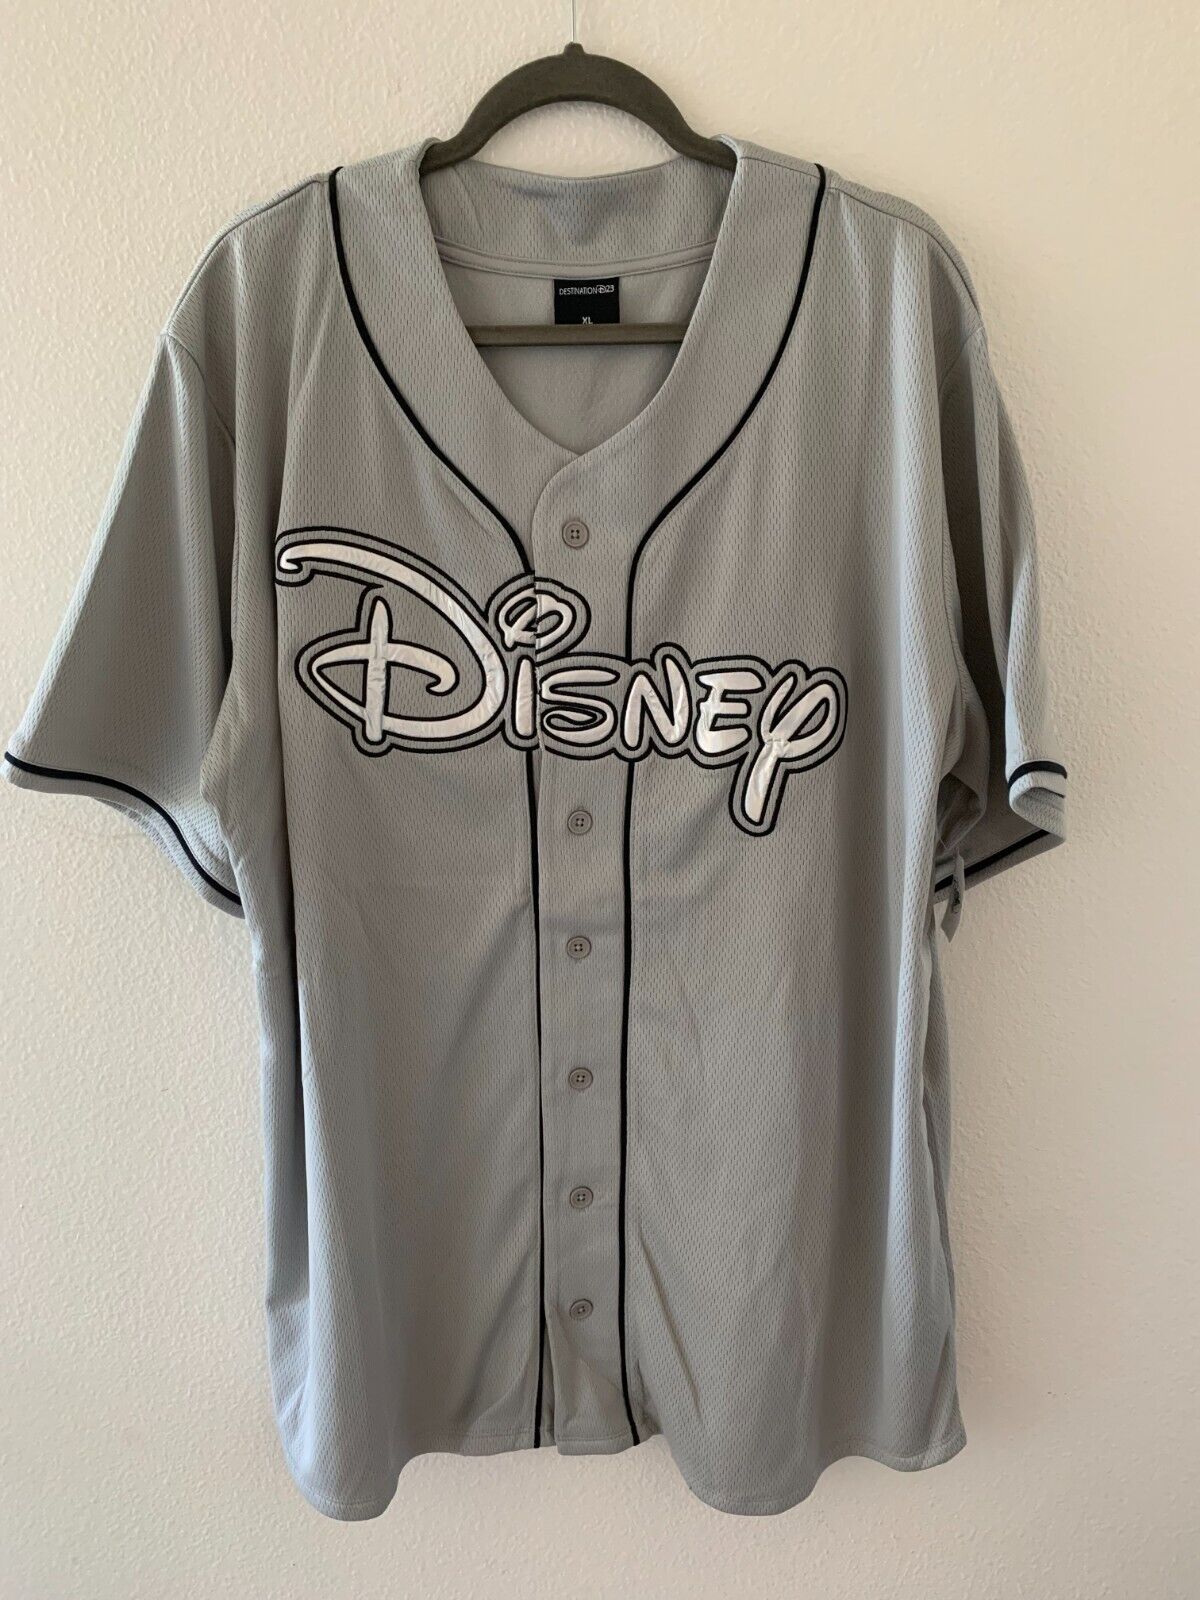 Disney Destination D23 Exclusive Baseball Jersey Size XL NWT LE